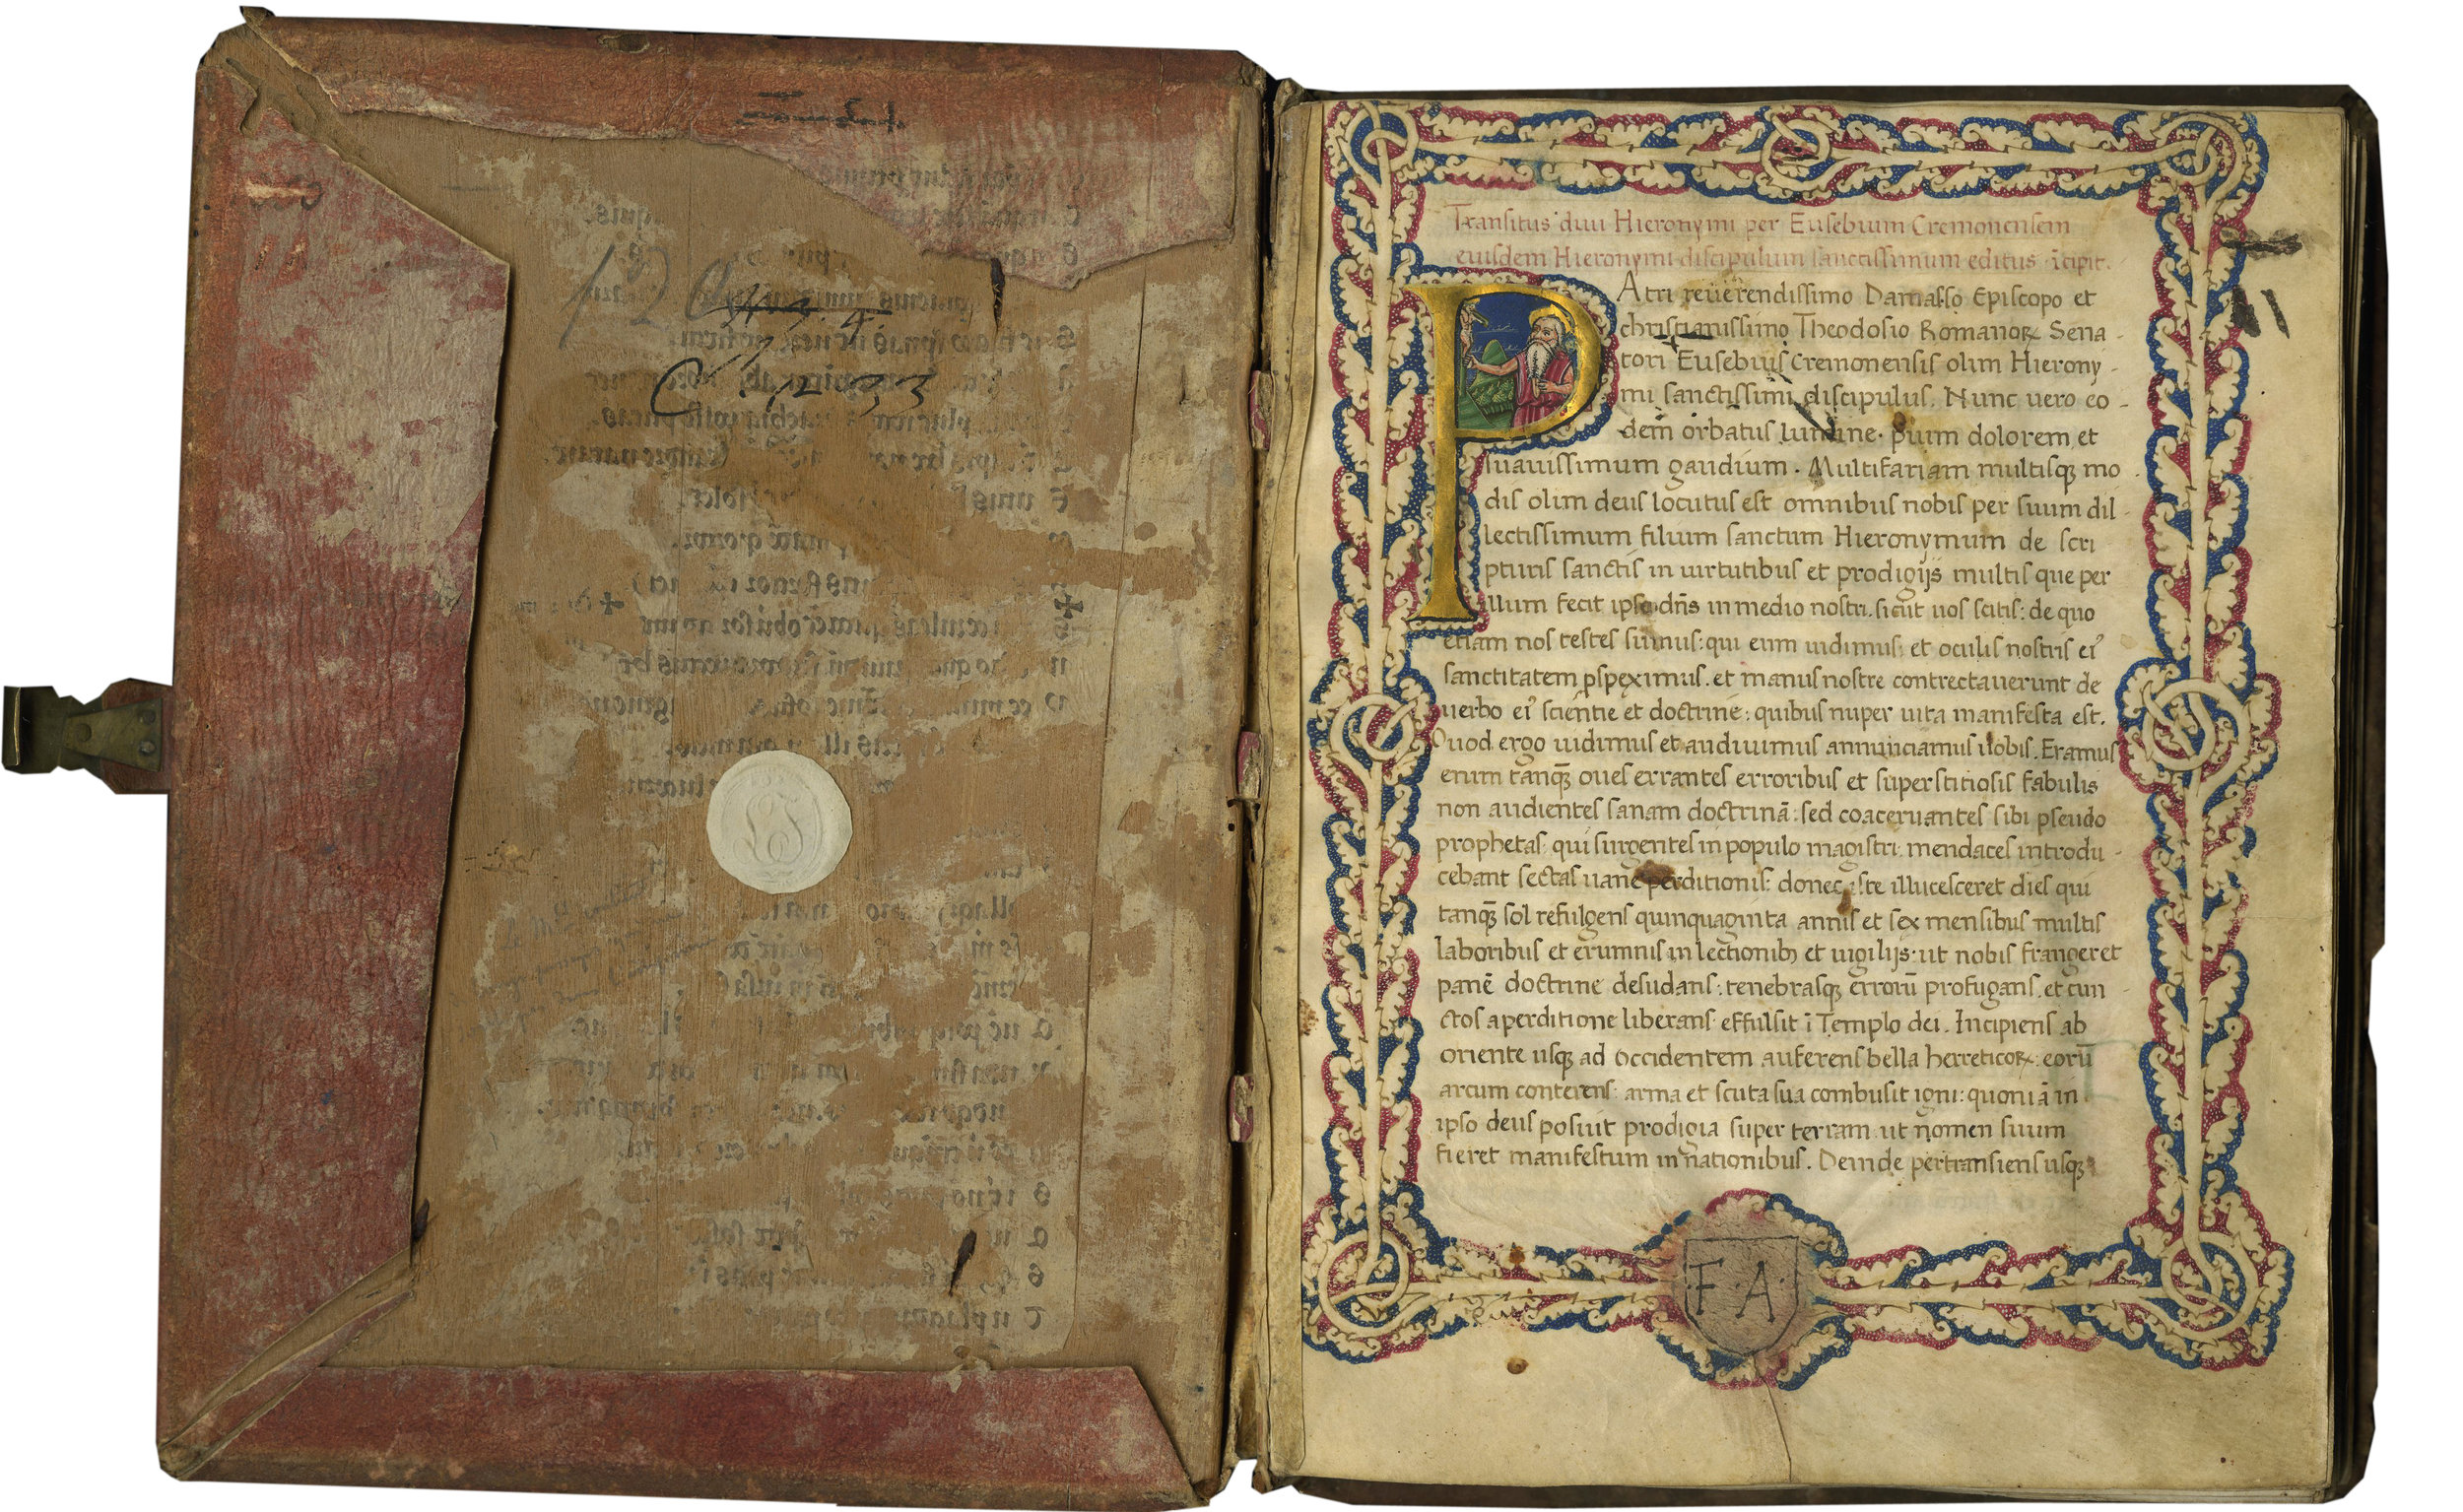 The Oxford book of Italian verse XIIIth century-XIX century